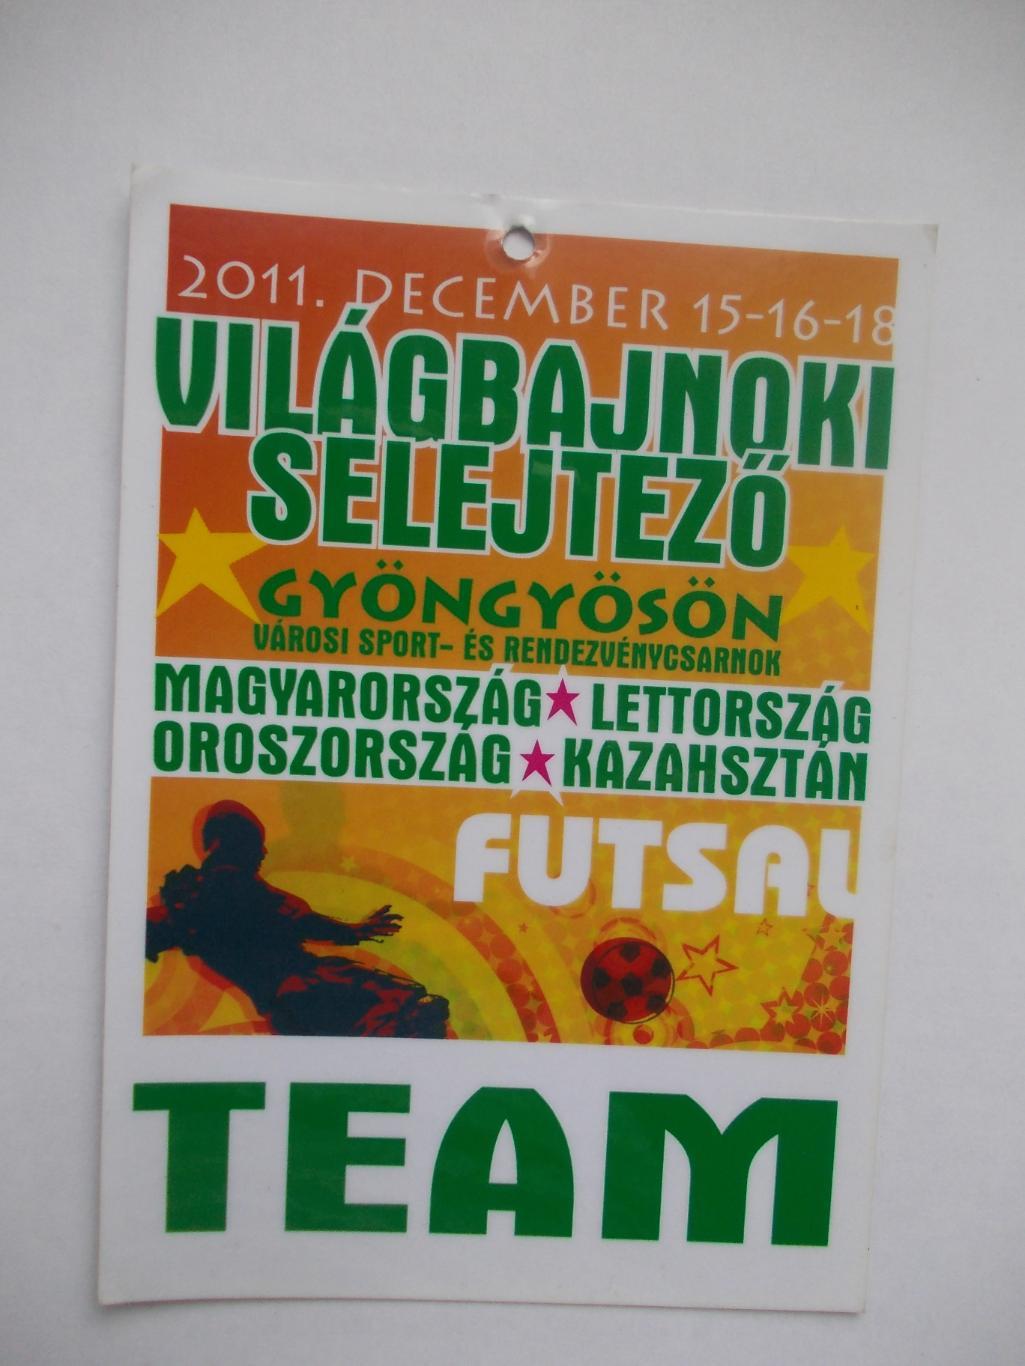 Аккредитация к отборочному турниру ЕВРО-2012